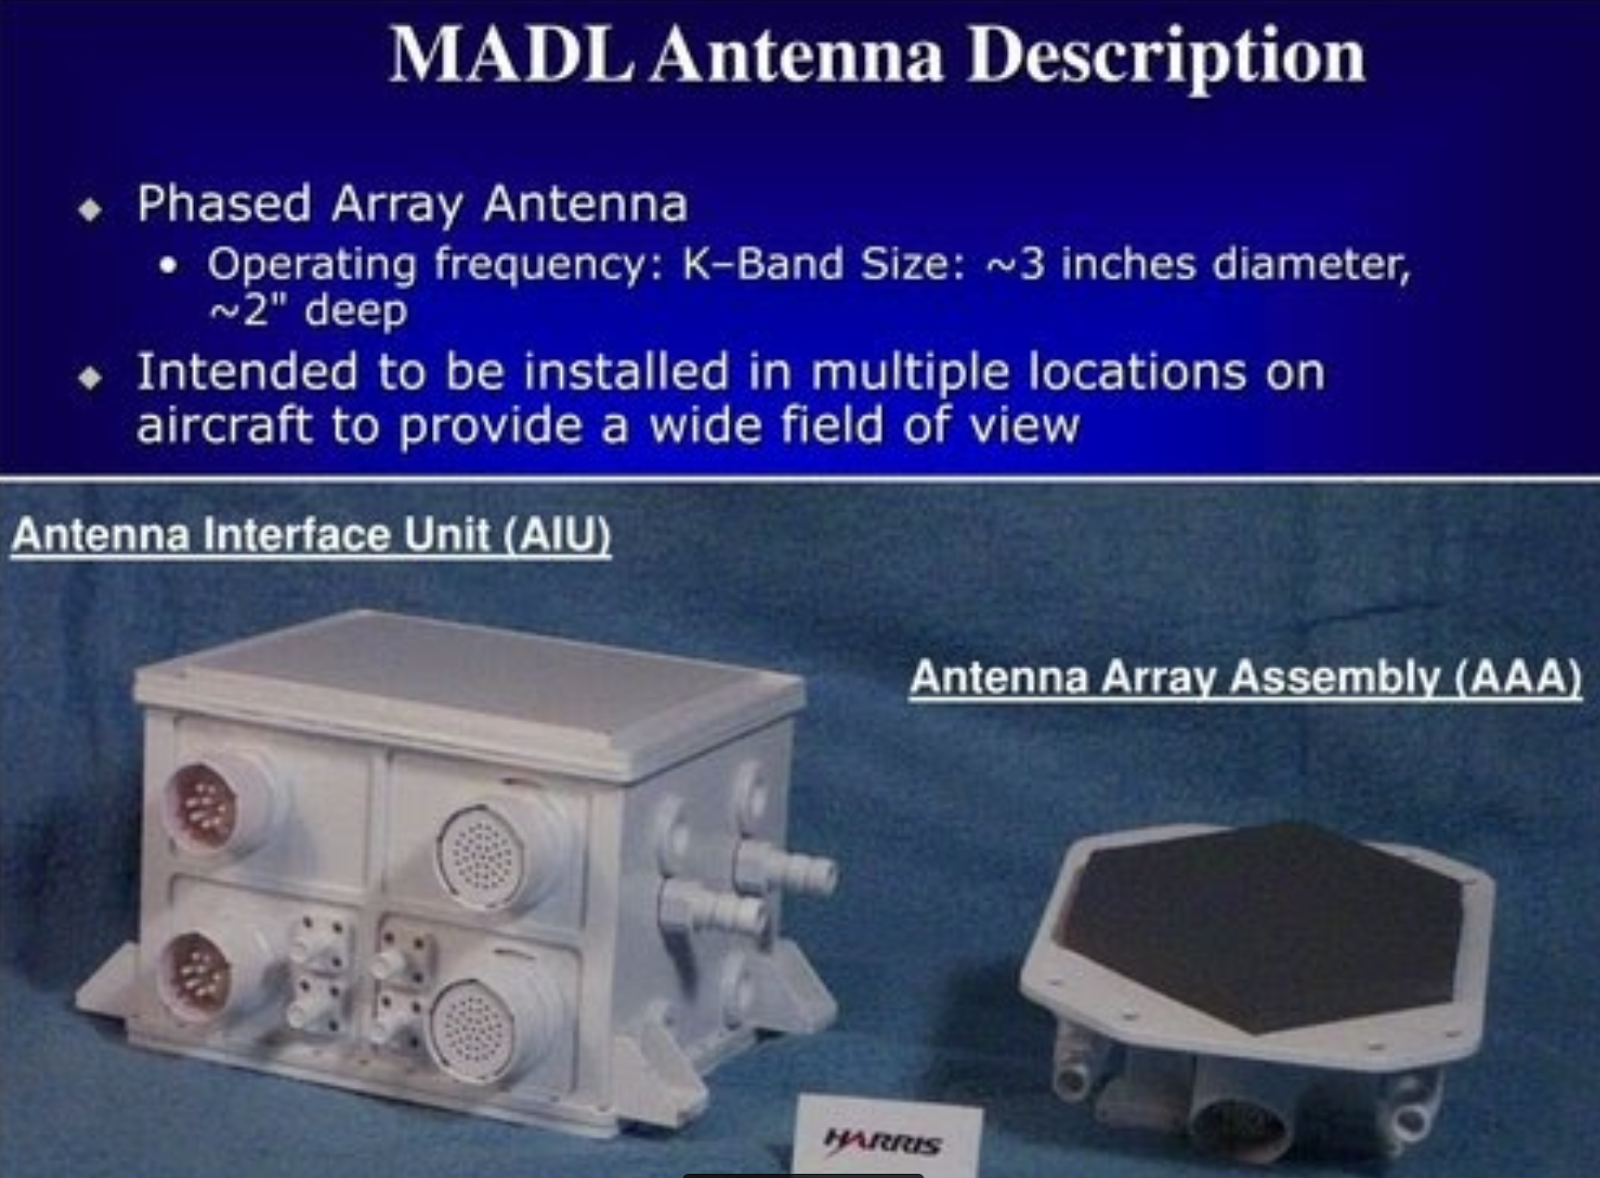 MDL antenna 및 antenna interface unit